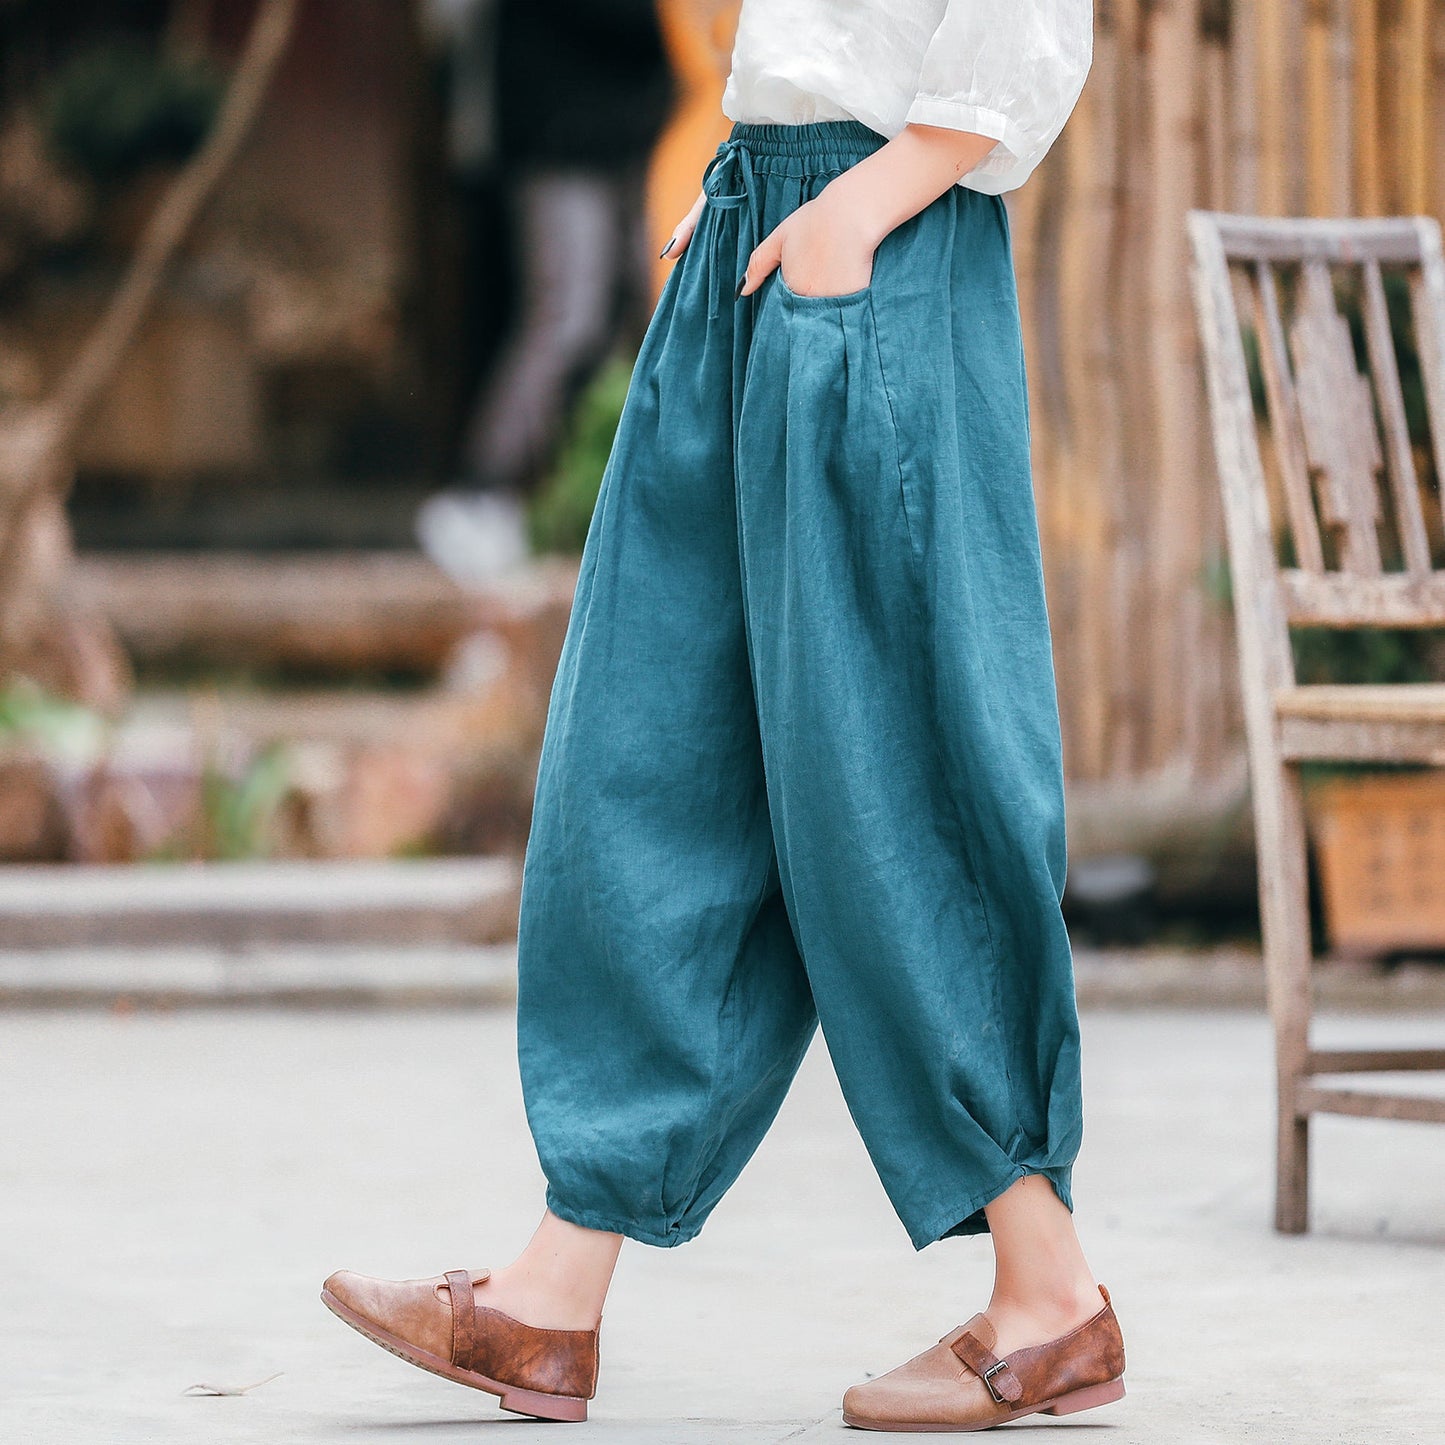 Ethnic Linen Elastic Waist Casual Pants for Women-Pants-JEWELRYSHEOWN